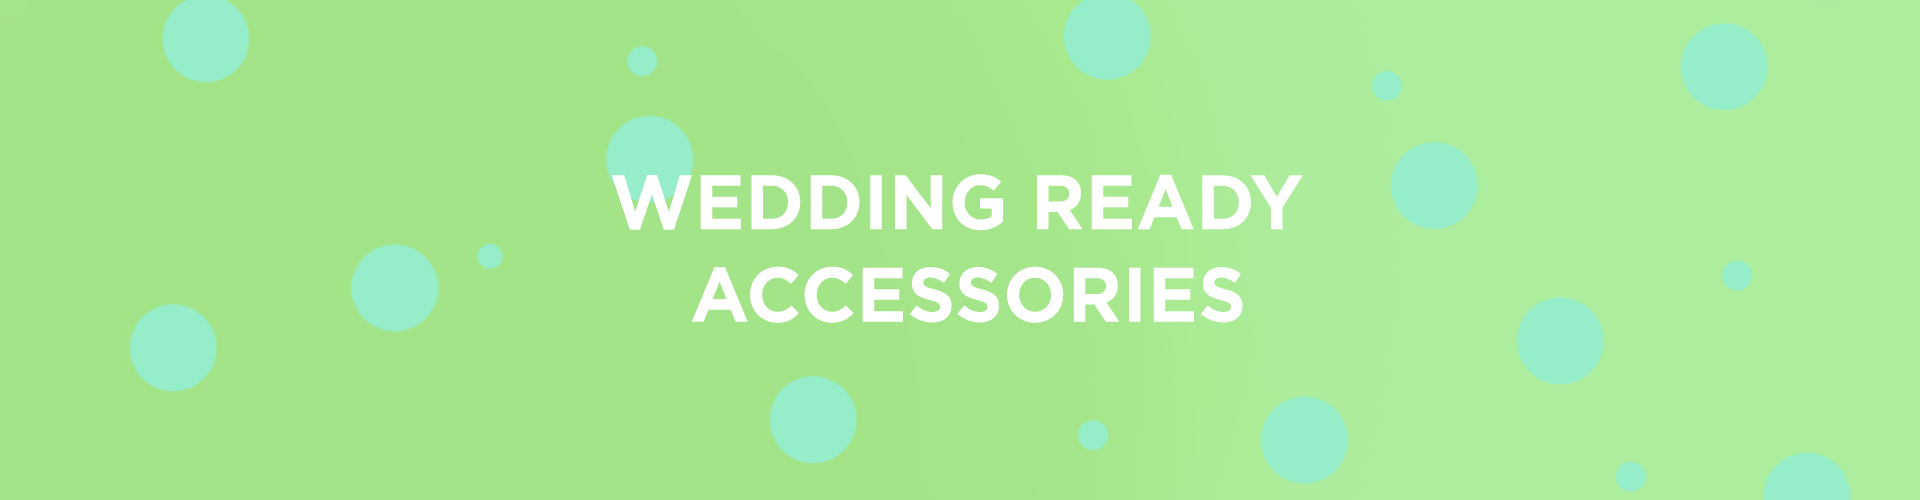 Wedding Ready Accessories